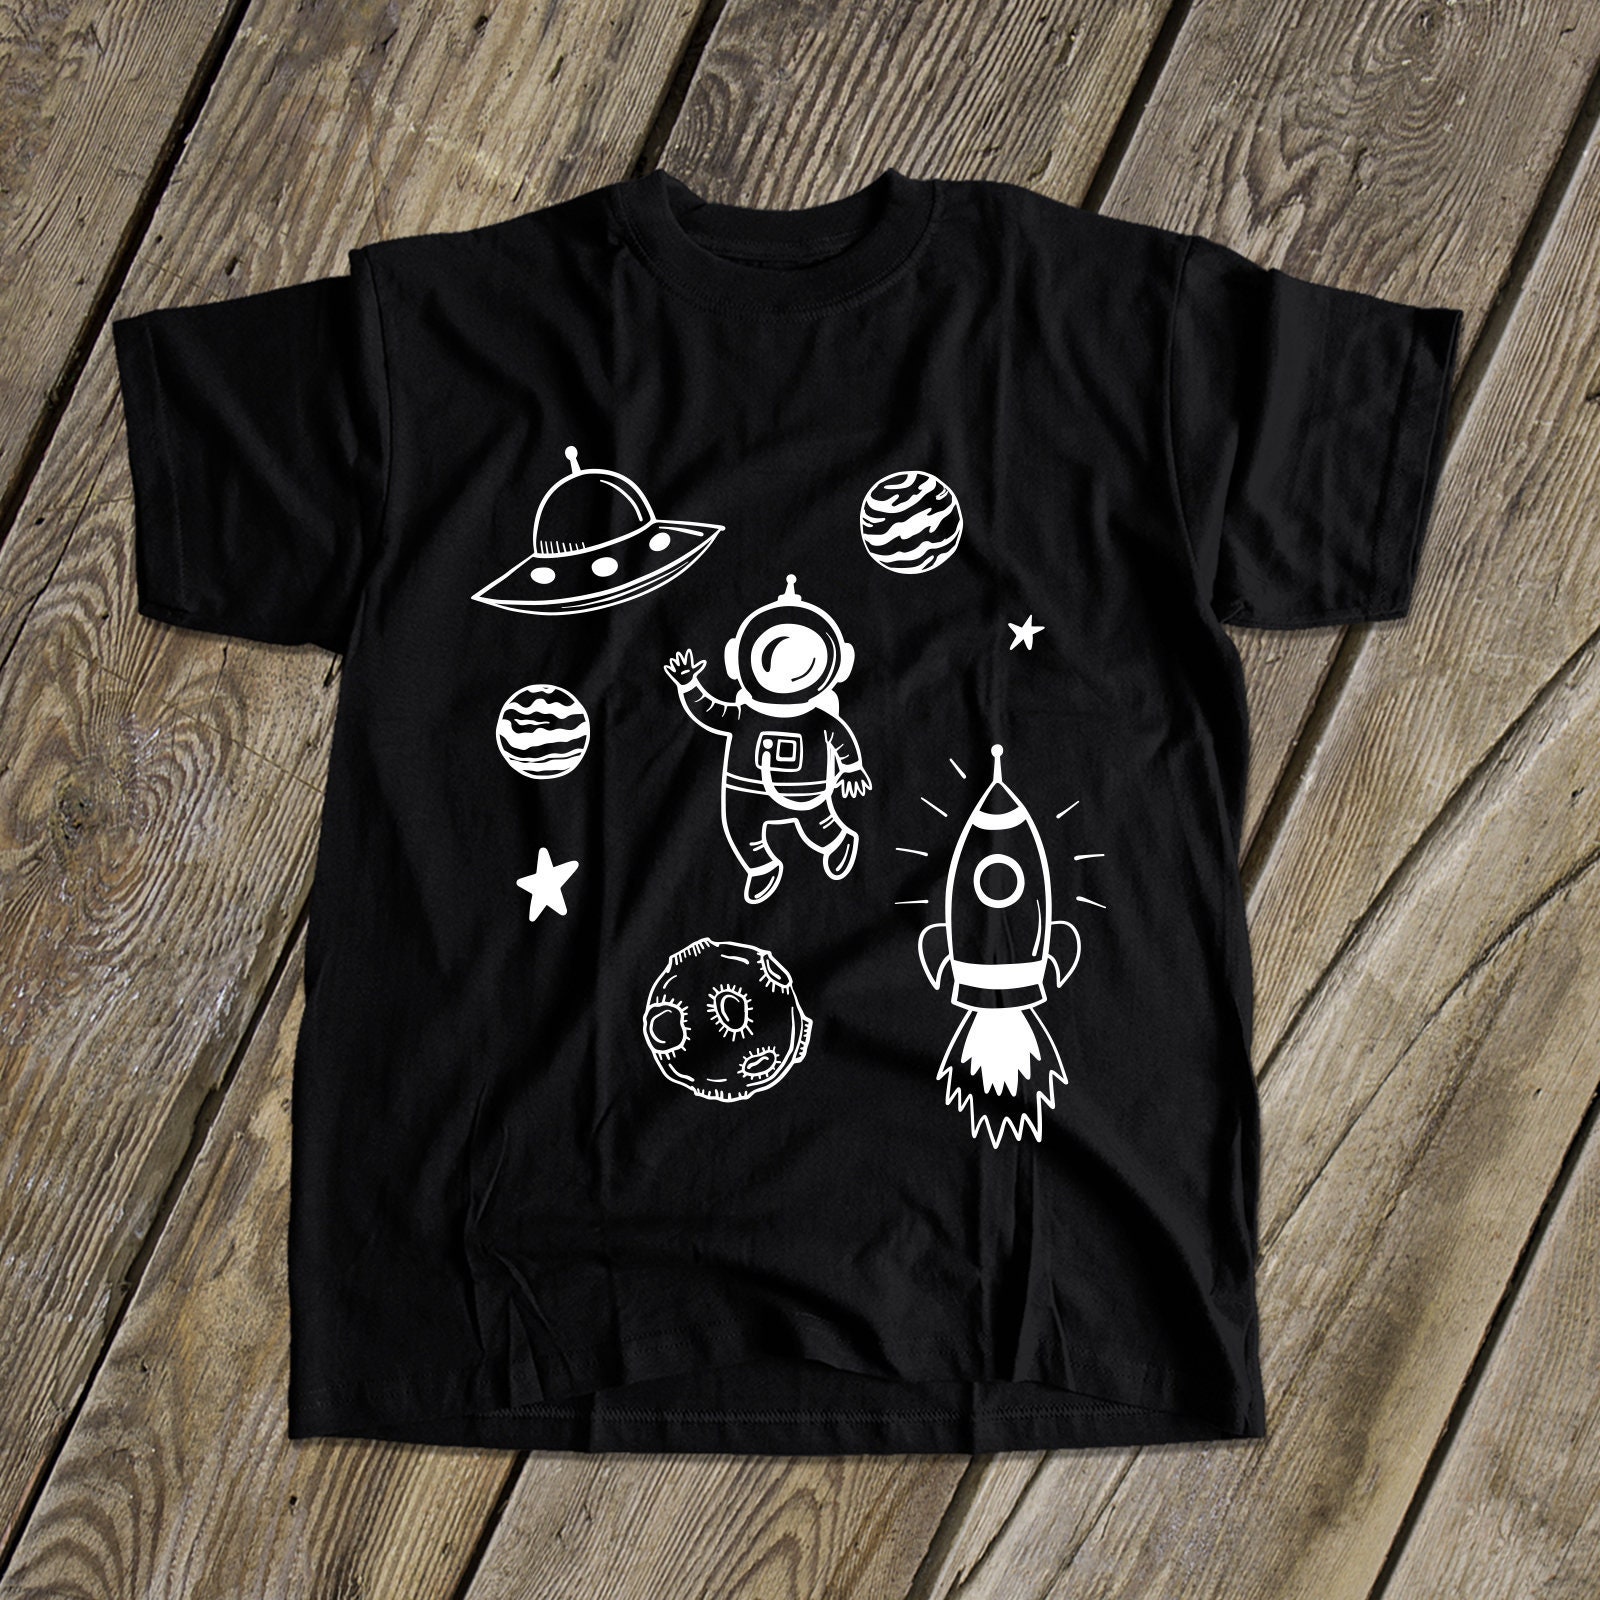 Astronaut kids shirt spaceship rocket dark tshirt fun | Etsy